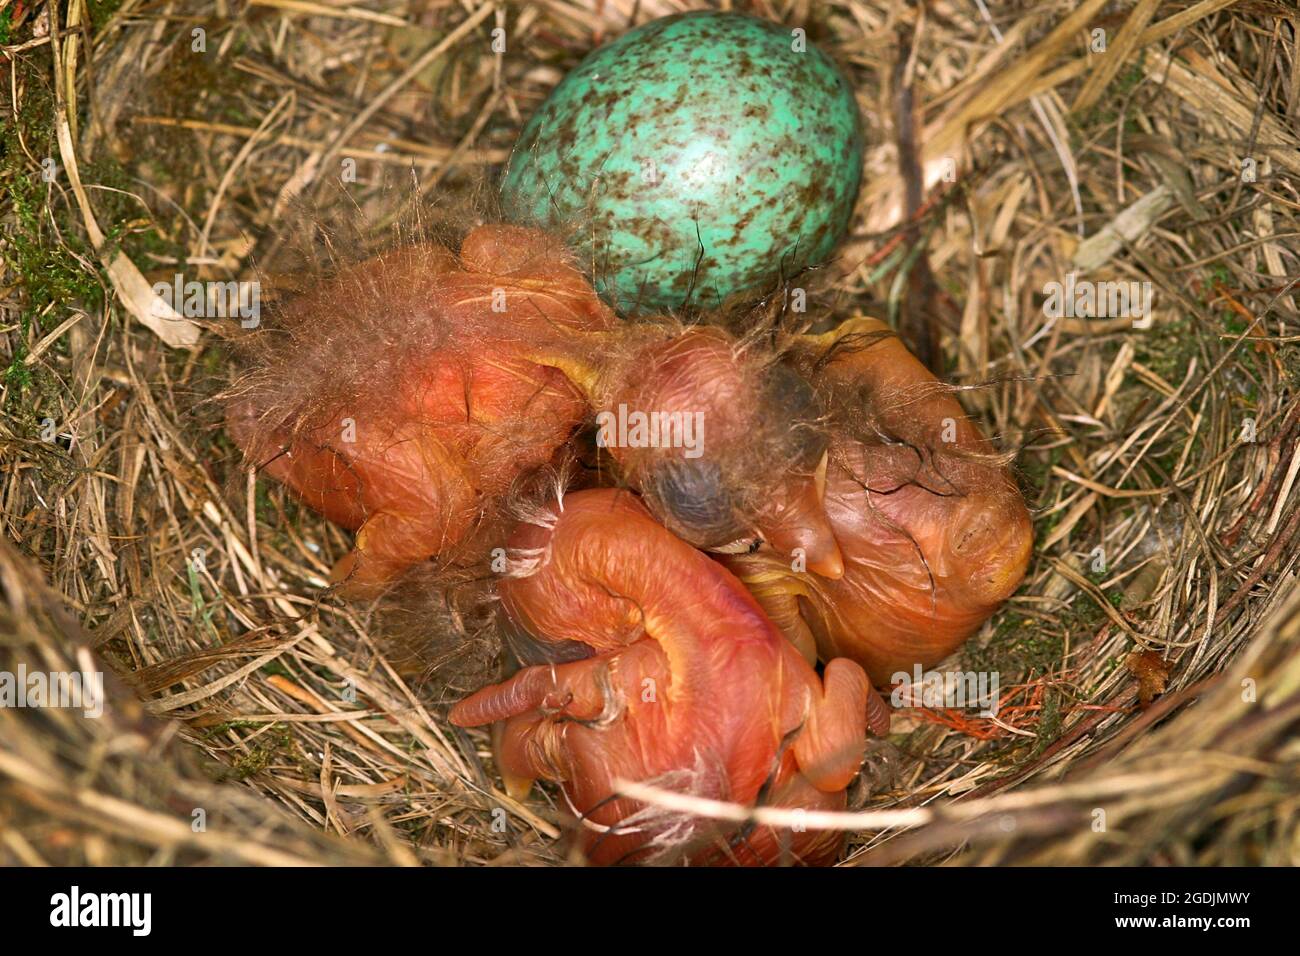 blackbird (Turdus merula), bird's egg and sleeping nestlings in a nest, Austria Stock Photo